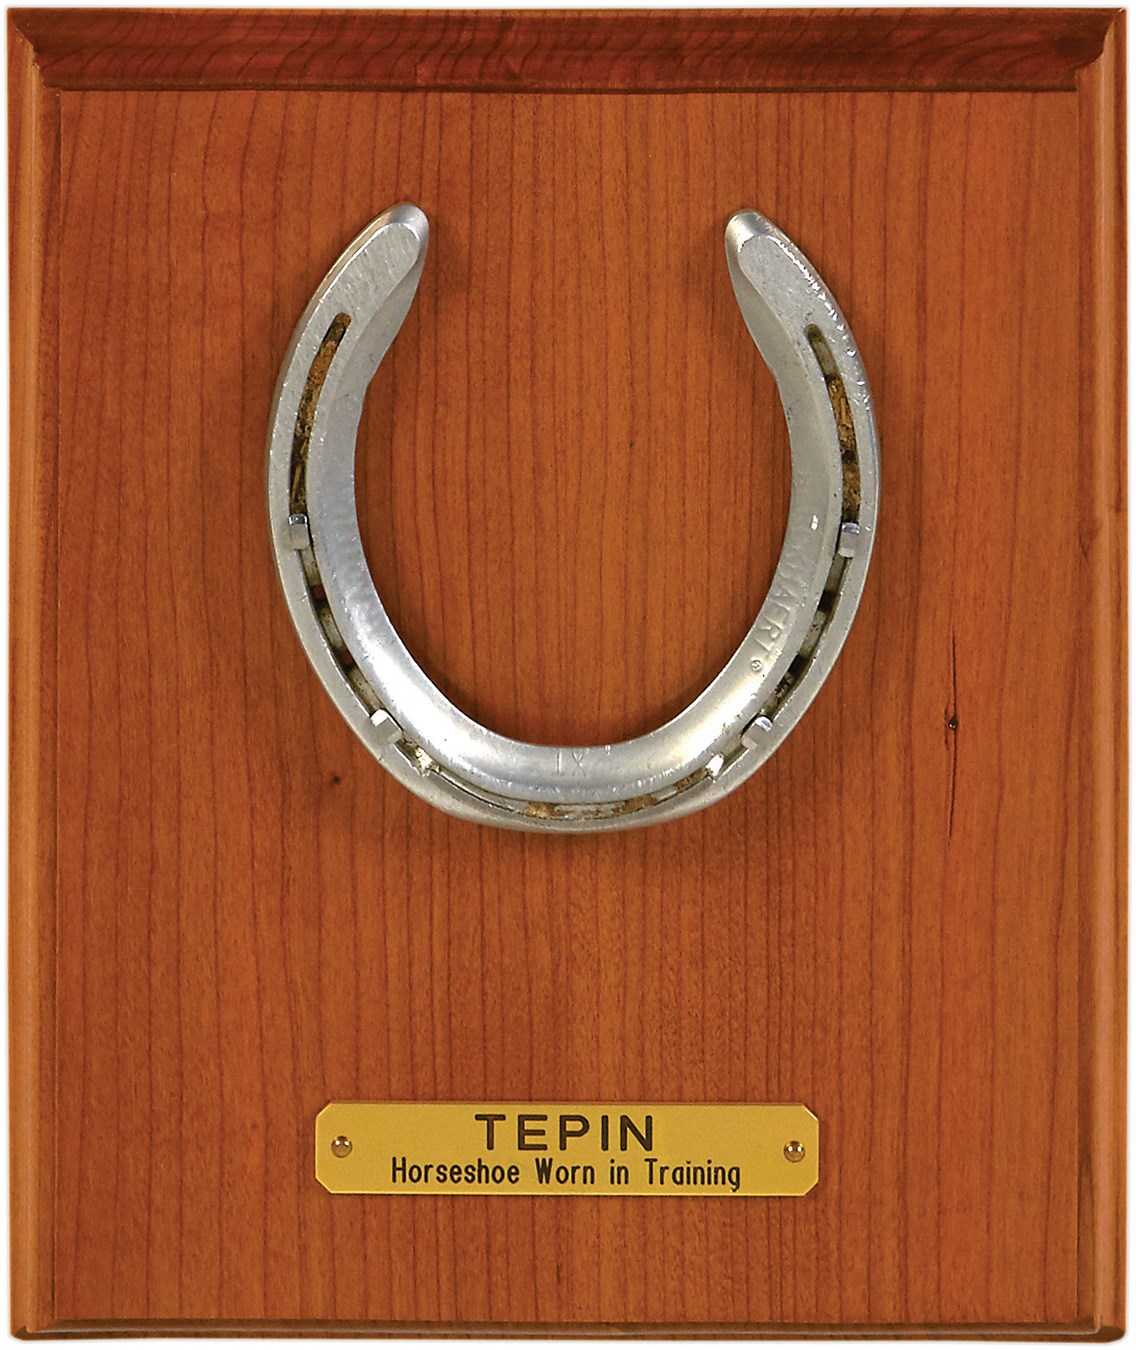 Horse Racing - "Tepin" Horseshoe Worn During Training